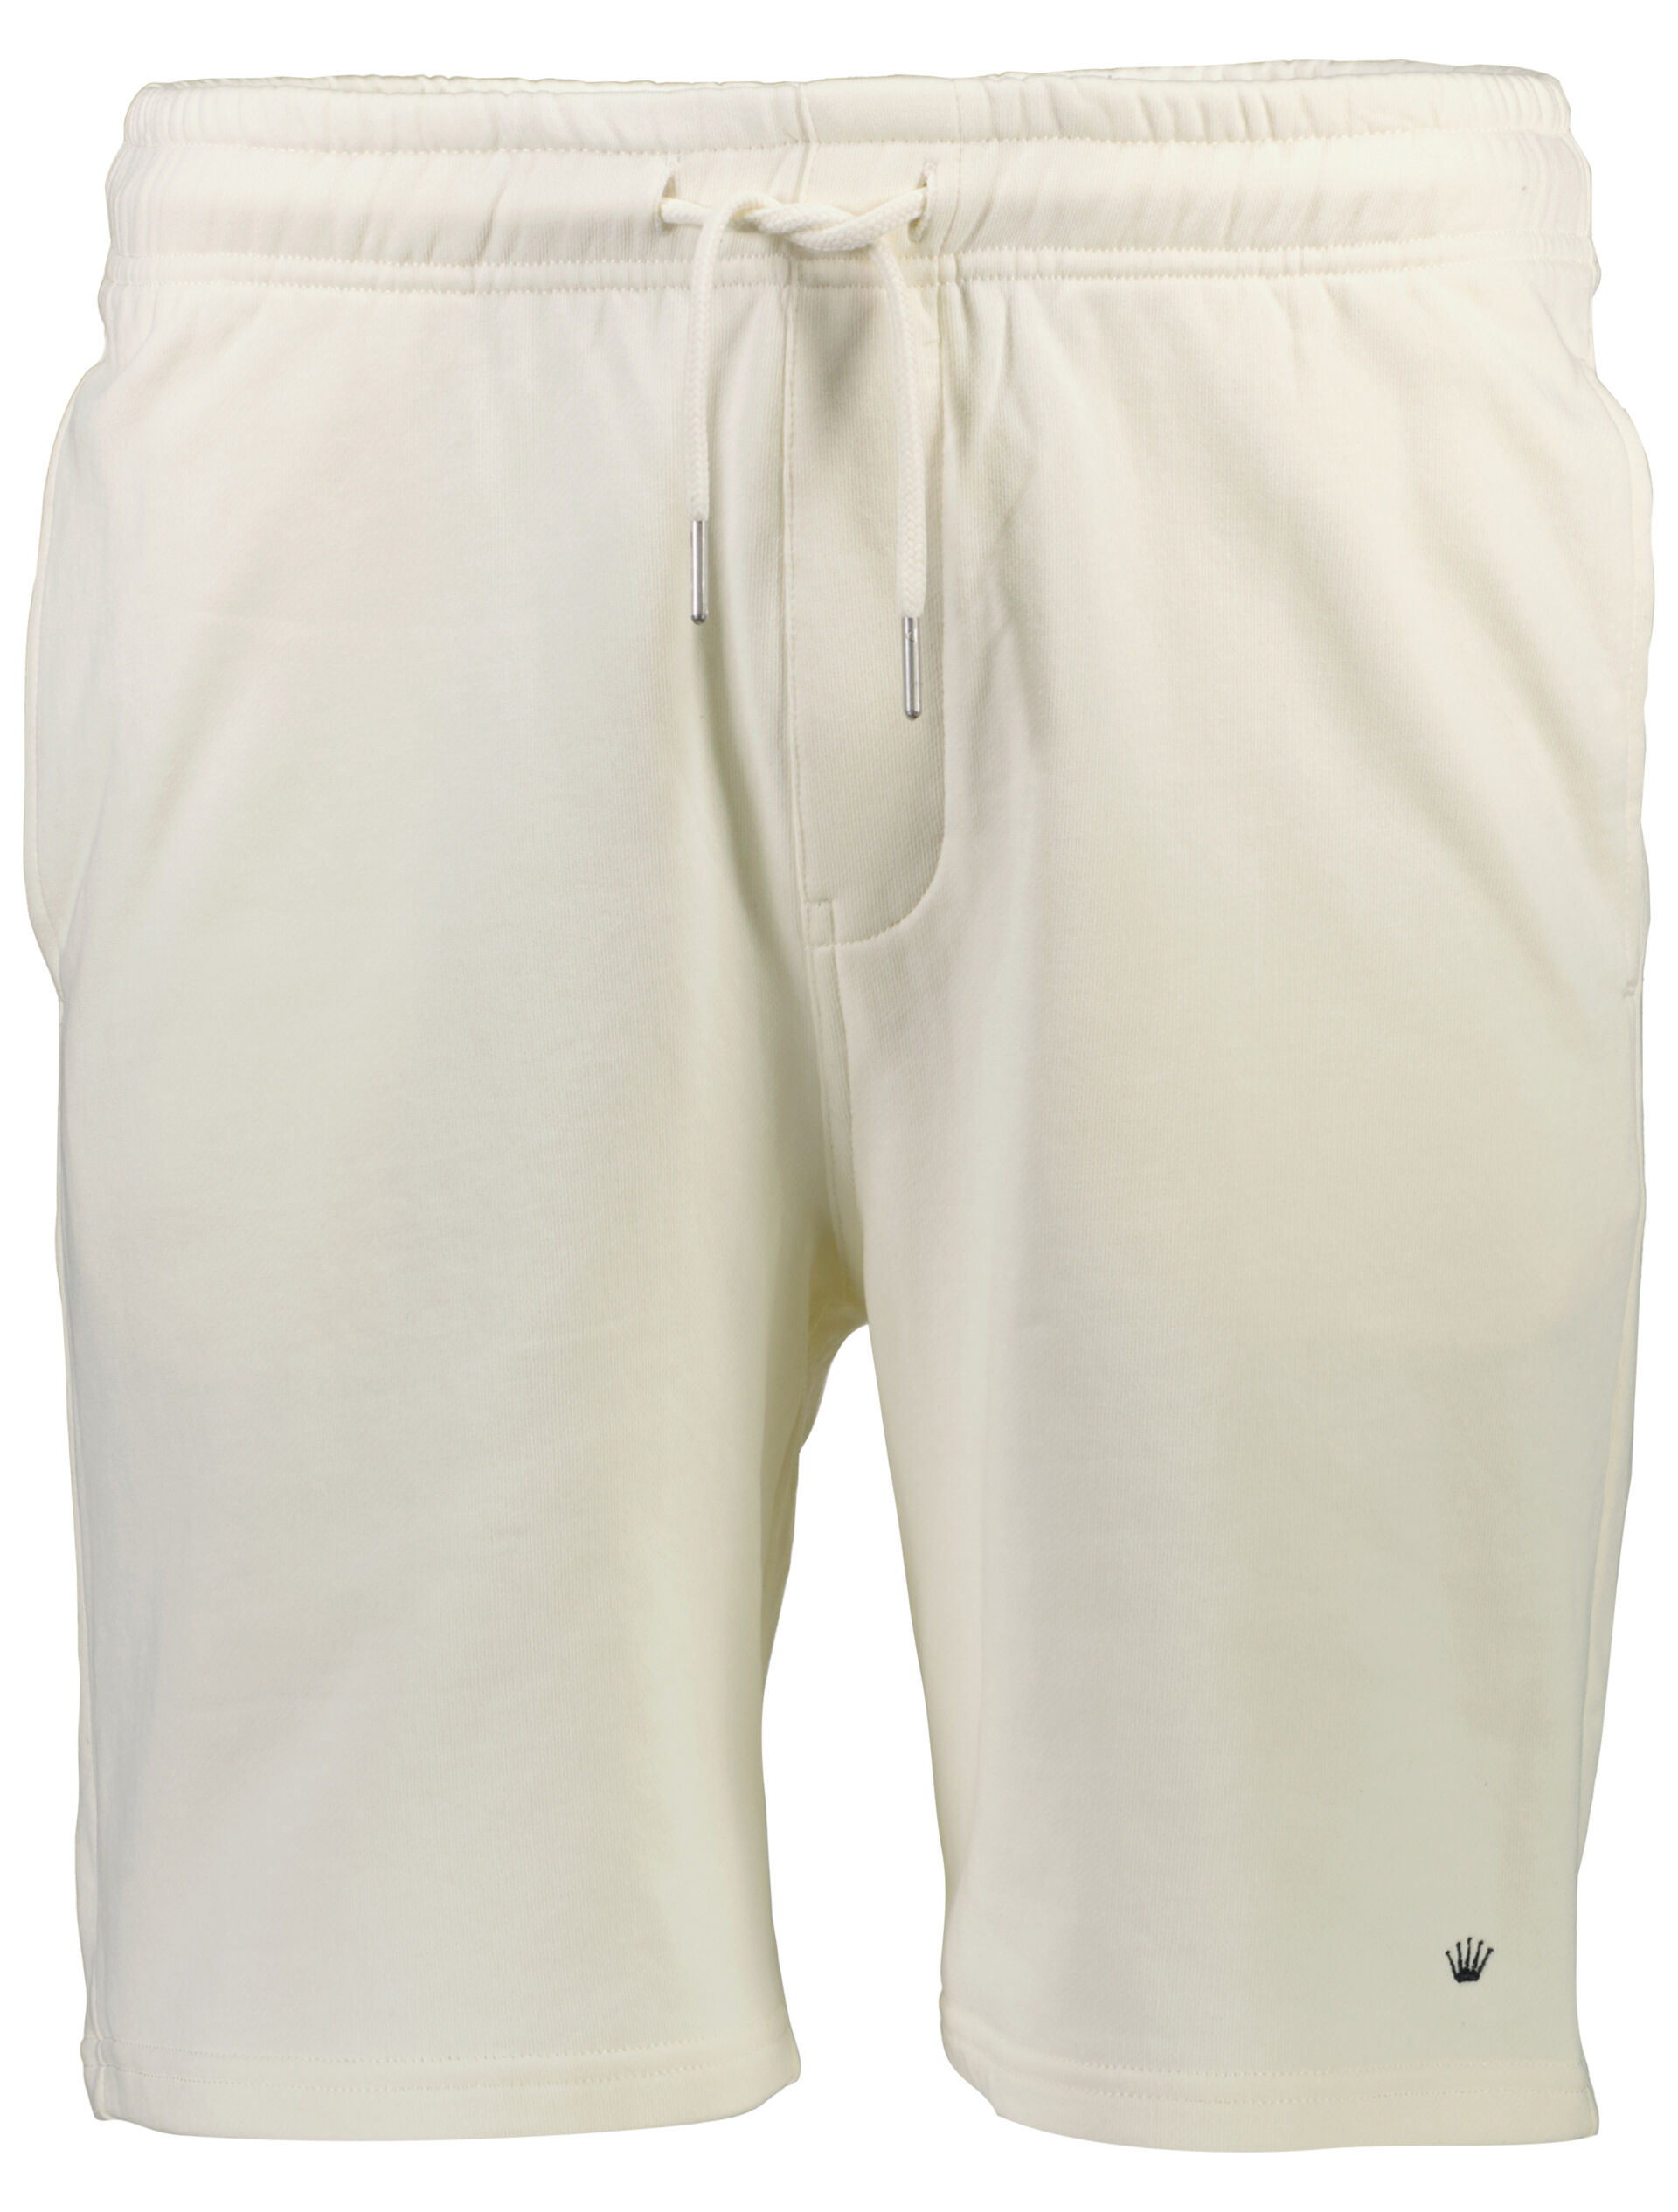 Casual shorts Casual shorts White 60-532005